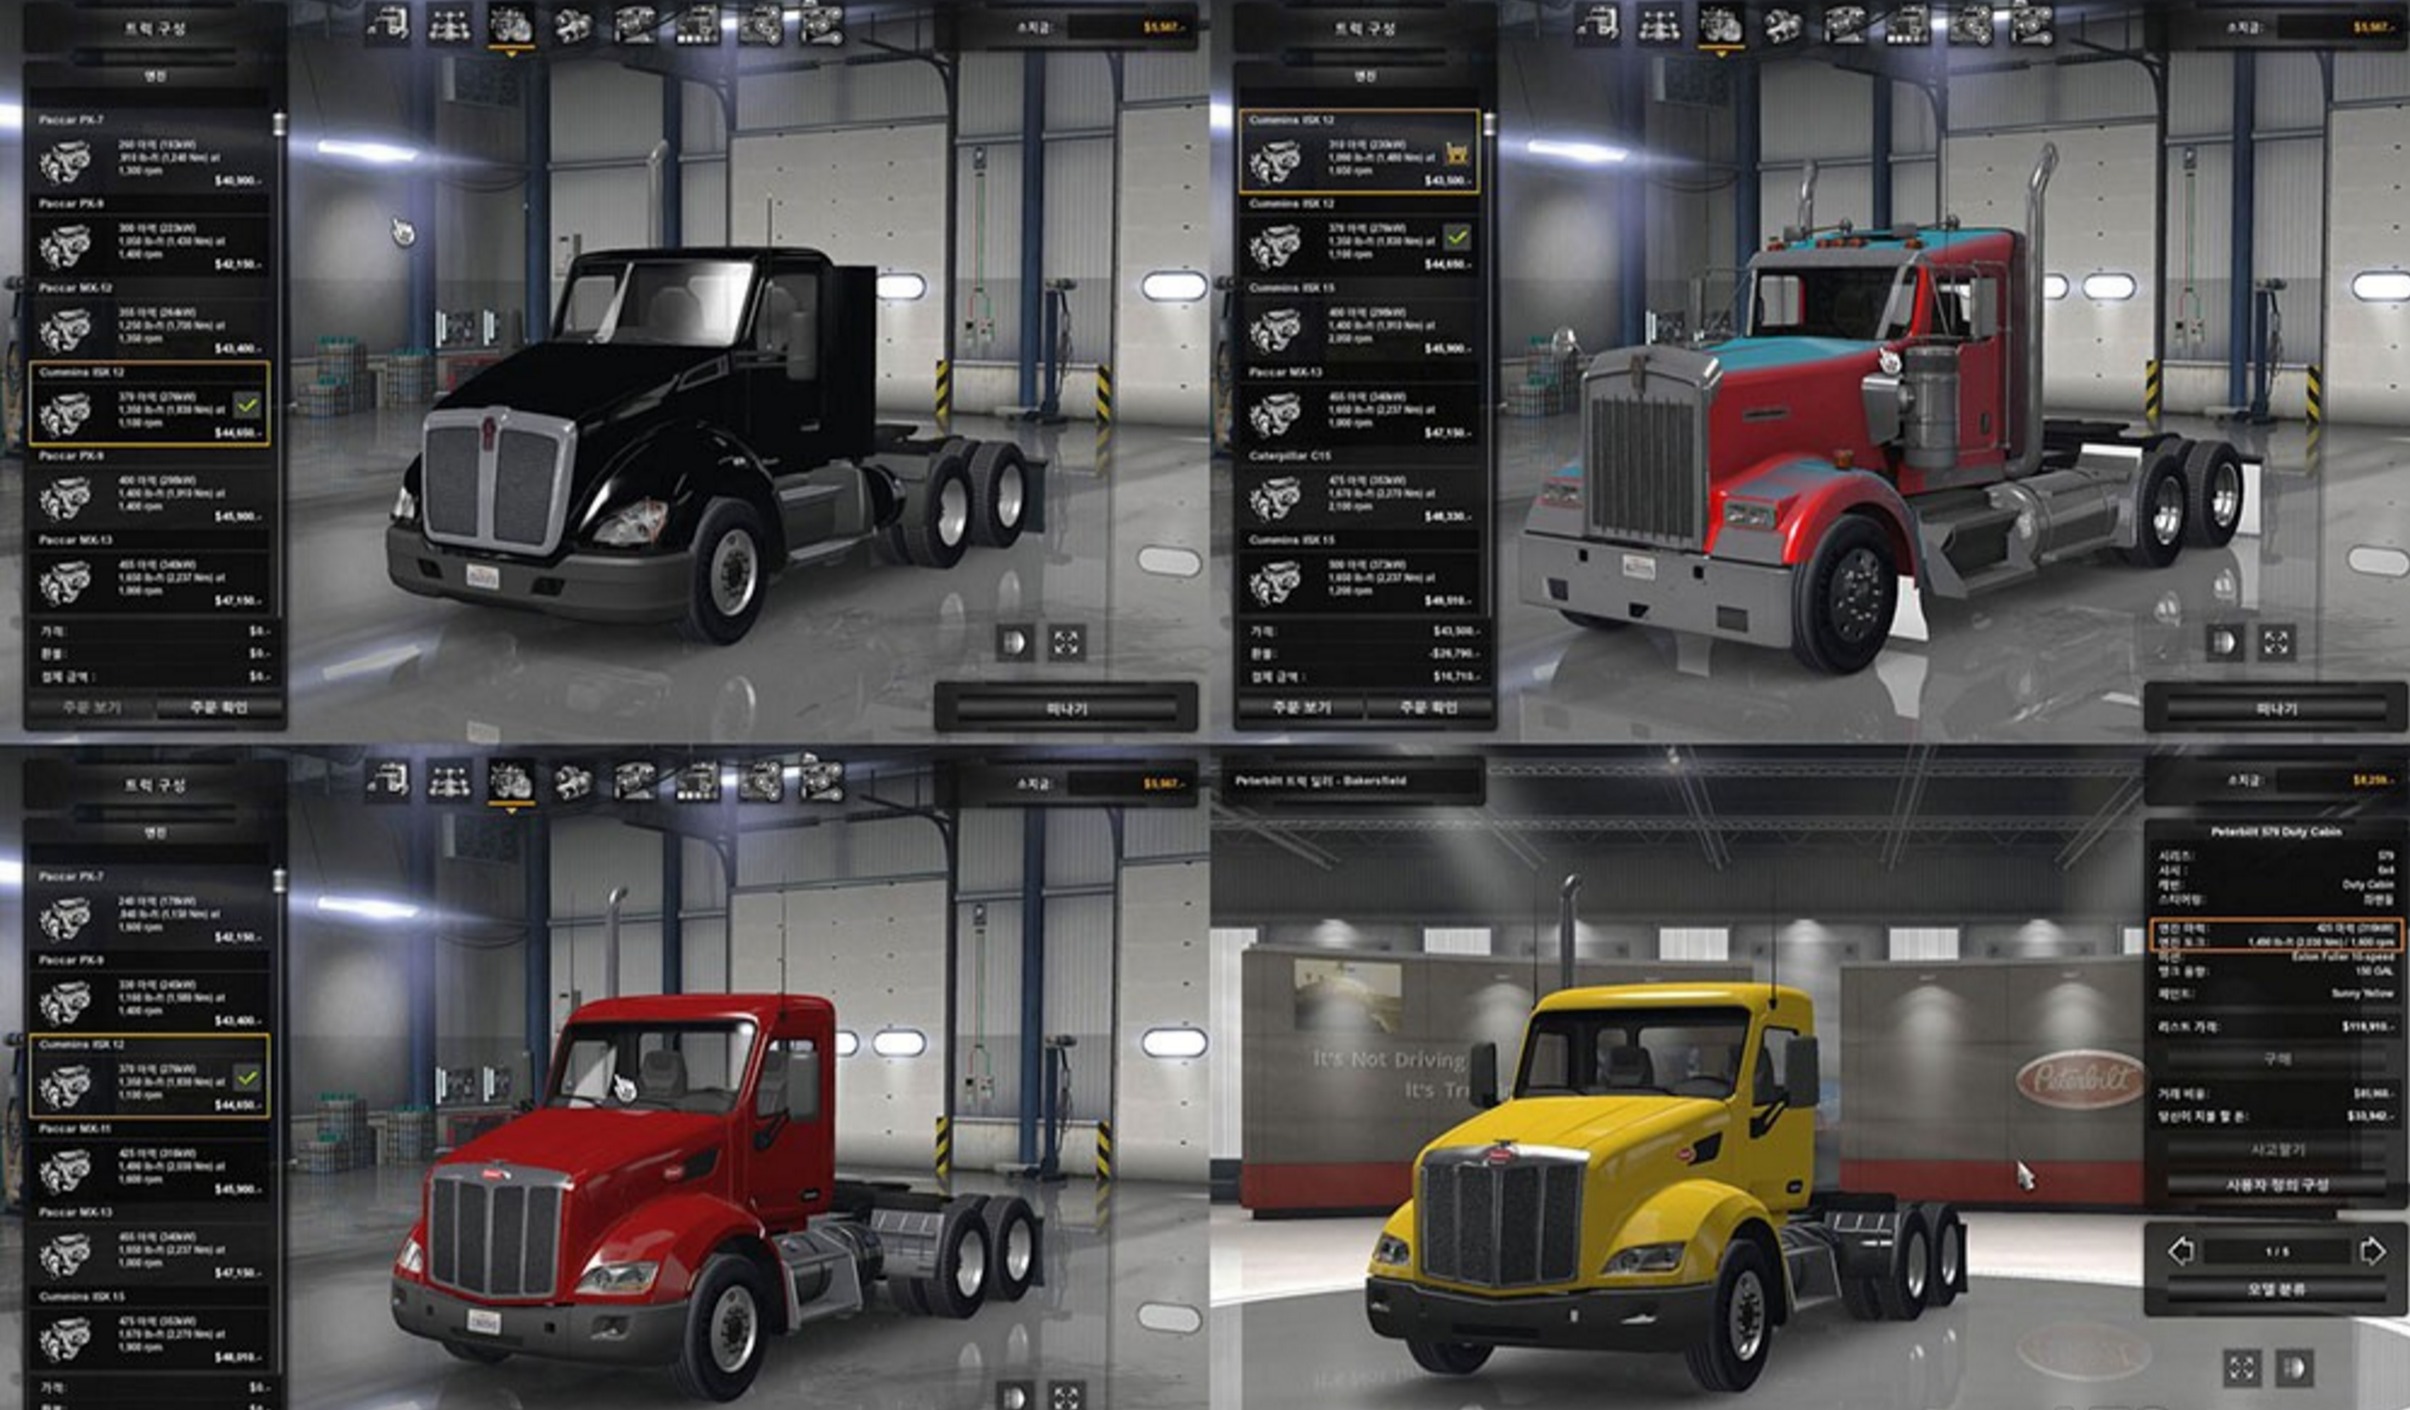 Import mod. American Truck Simulator [7l]. American Truck Simulator моды. Американ трак симулятор 2015. ATS мод на экономику.